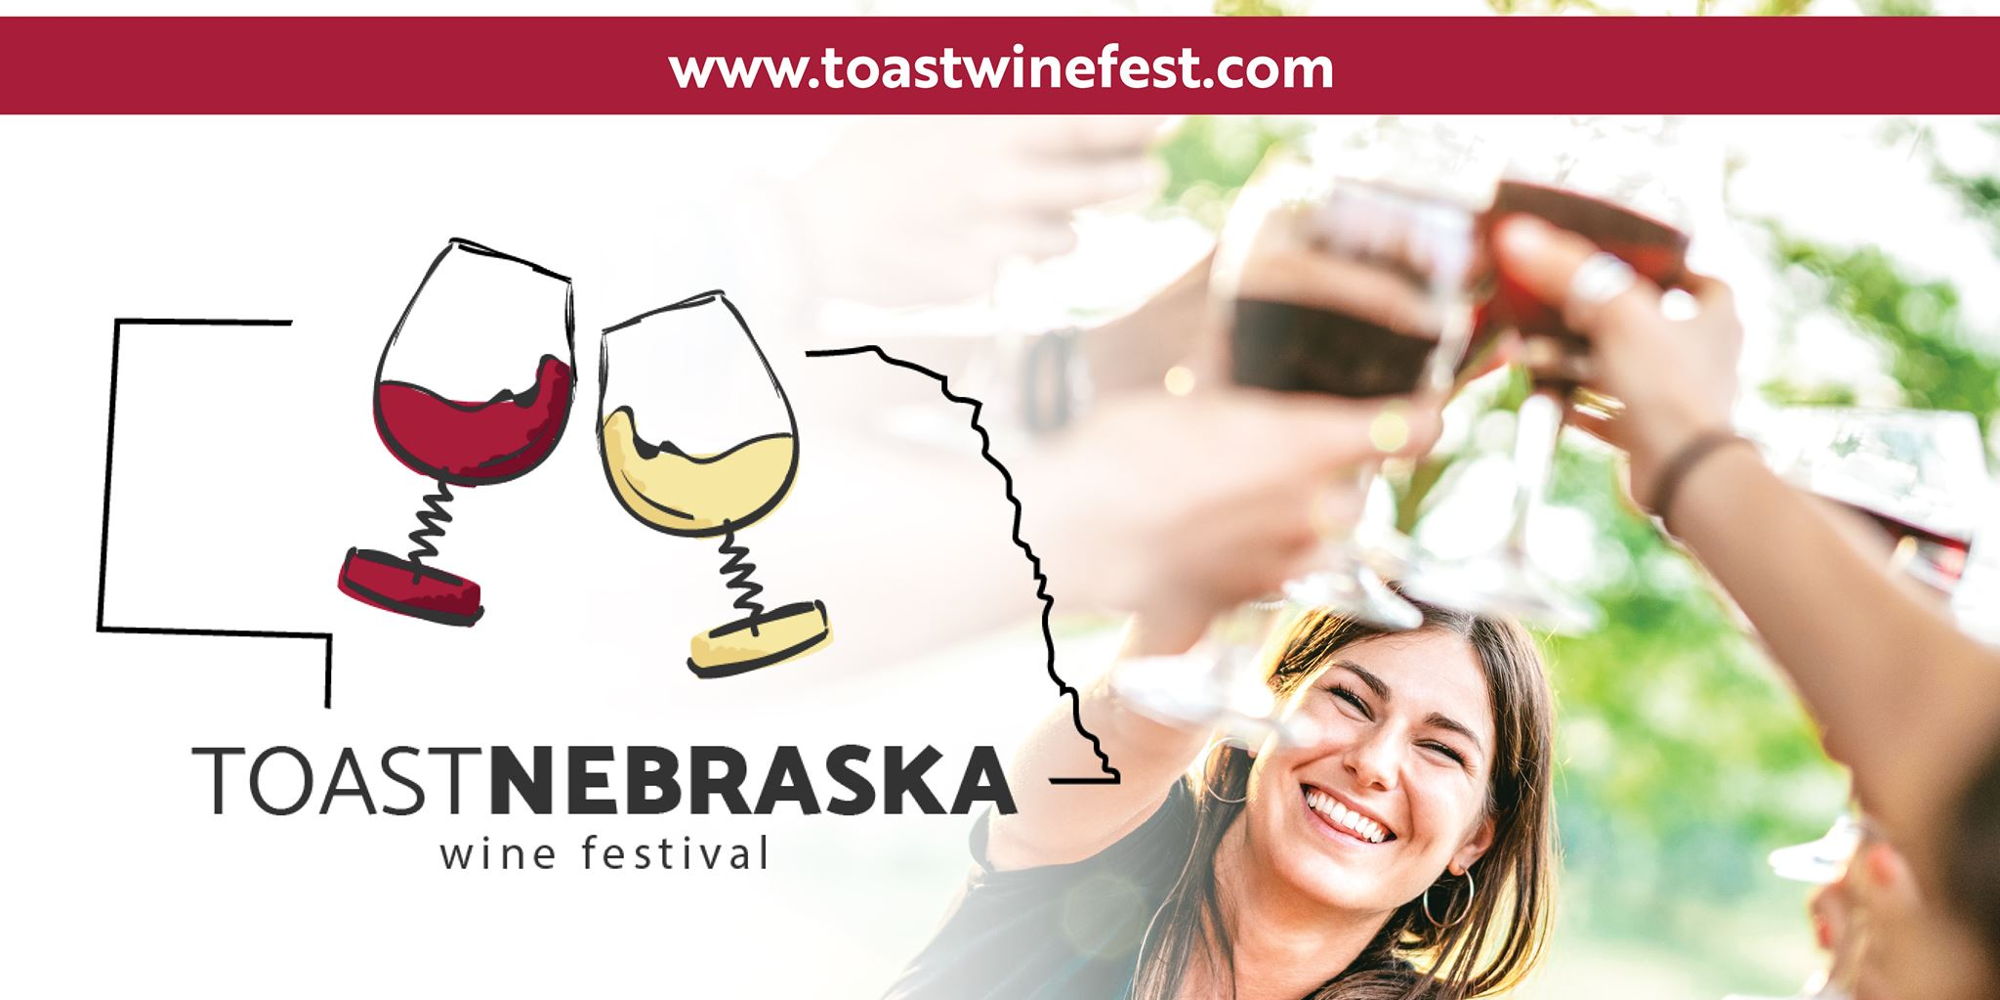 Toast Nebraska Wine Festival promotional image